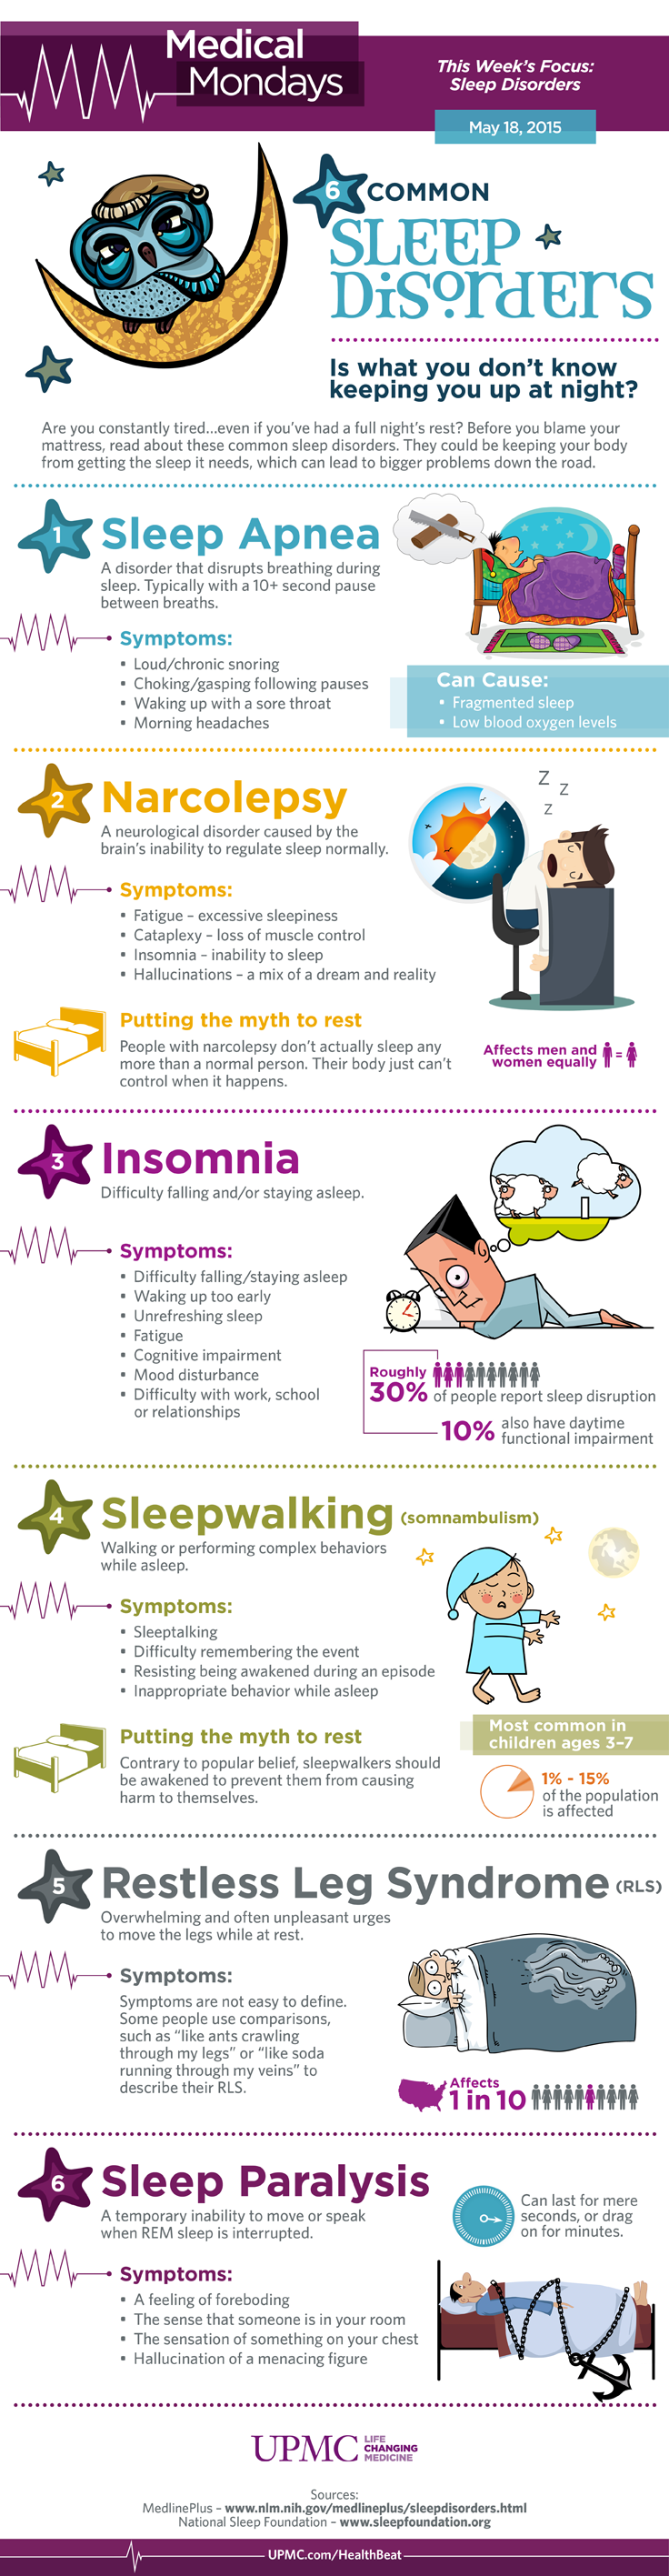 Sleep disorders that are potentially disturbing your sleep